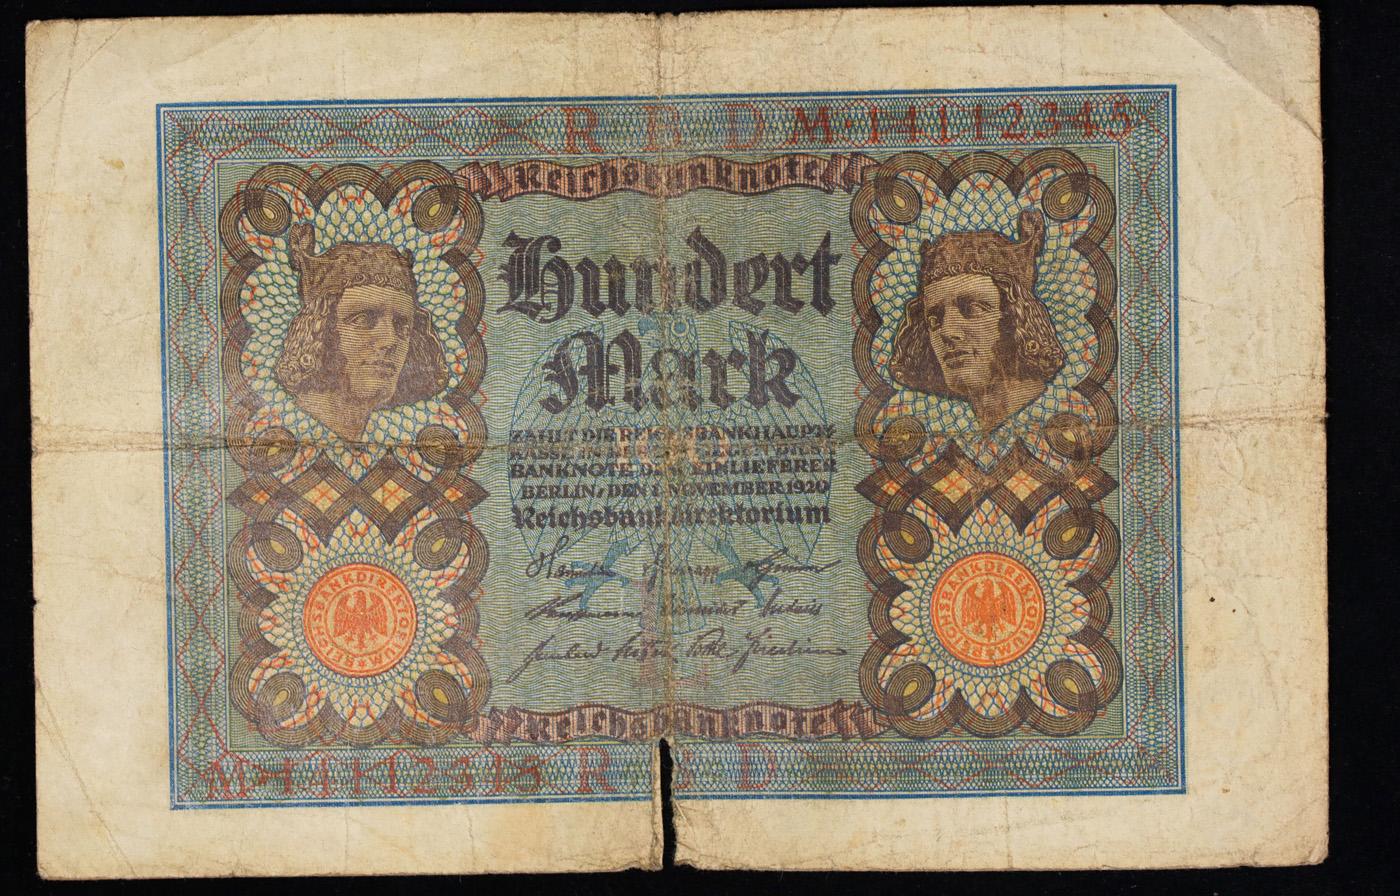 1920 Weimar Germany 100 Mark Note P# 69B Grades vf details